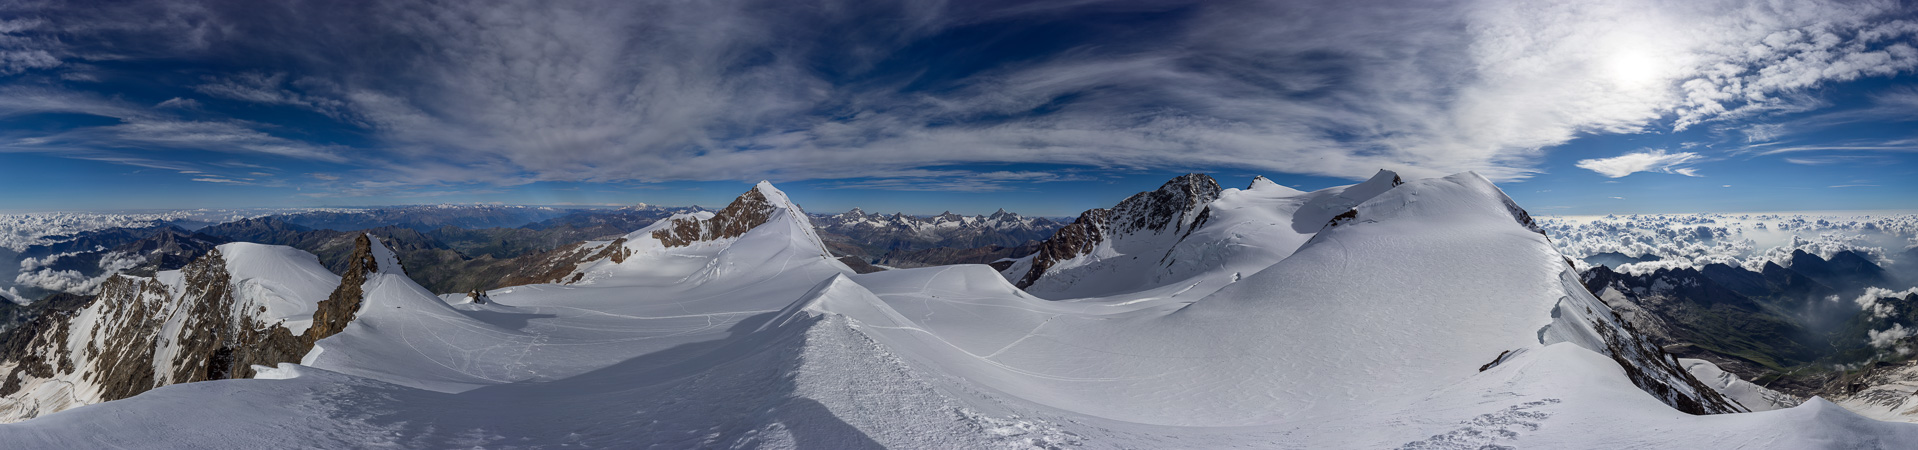 Wunderbares Gipfelpanorama über die Monte Rosa Berge hinweg bis zur Bernina.